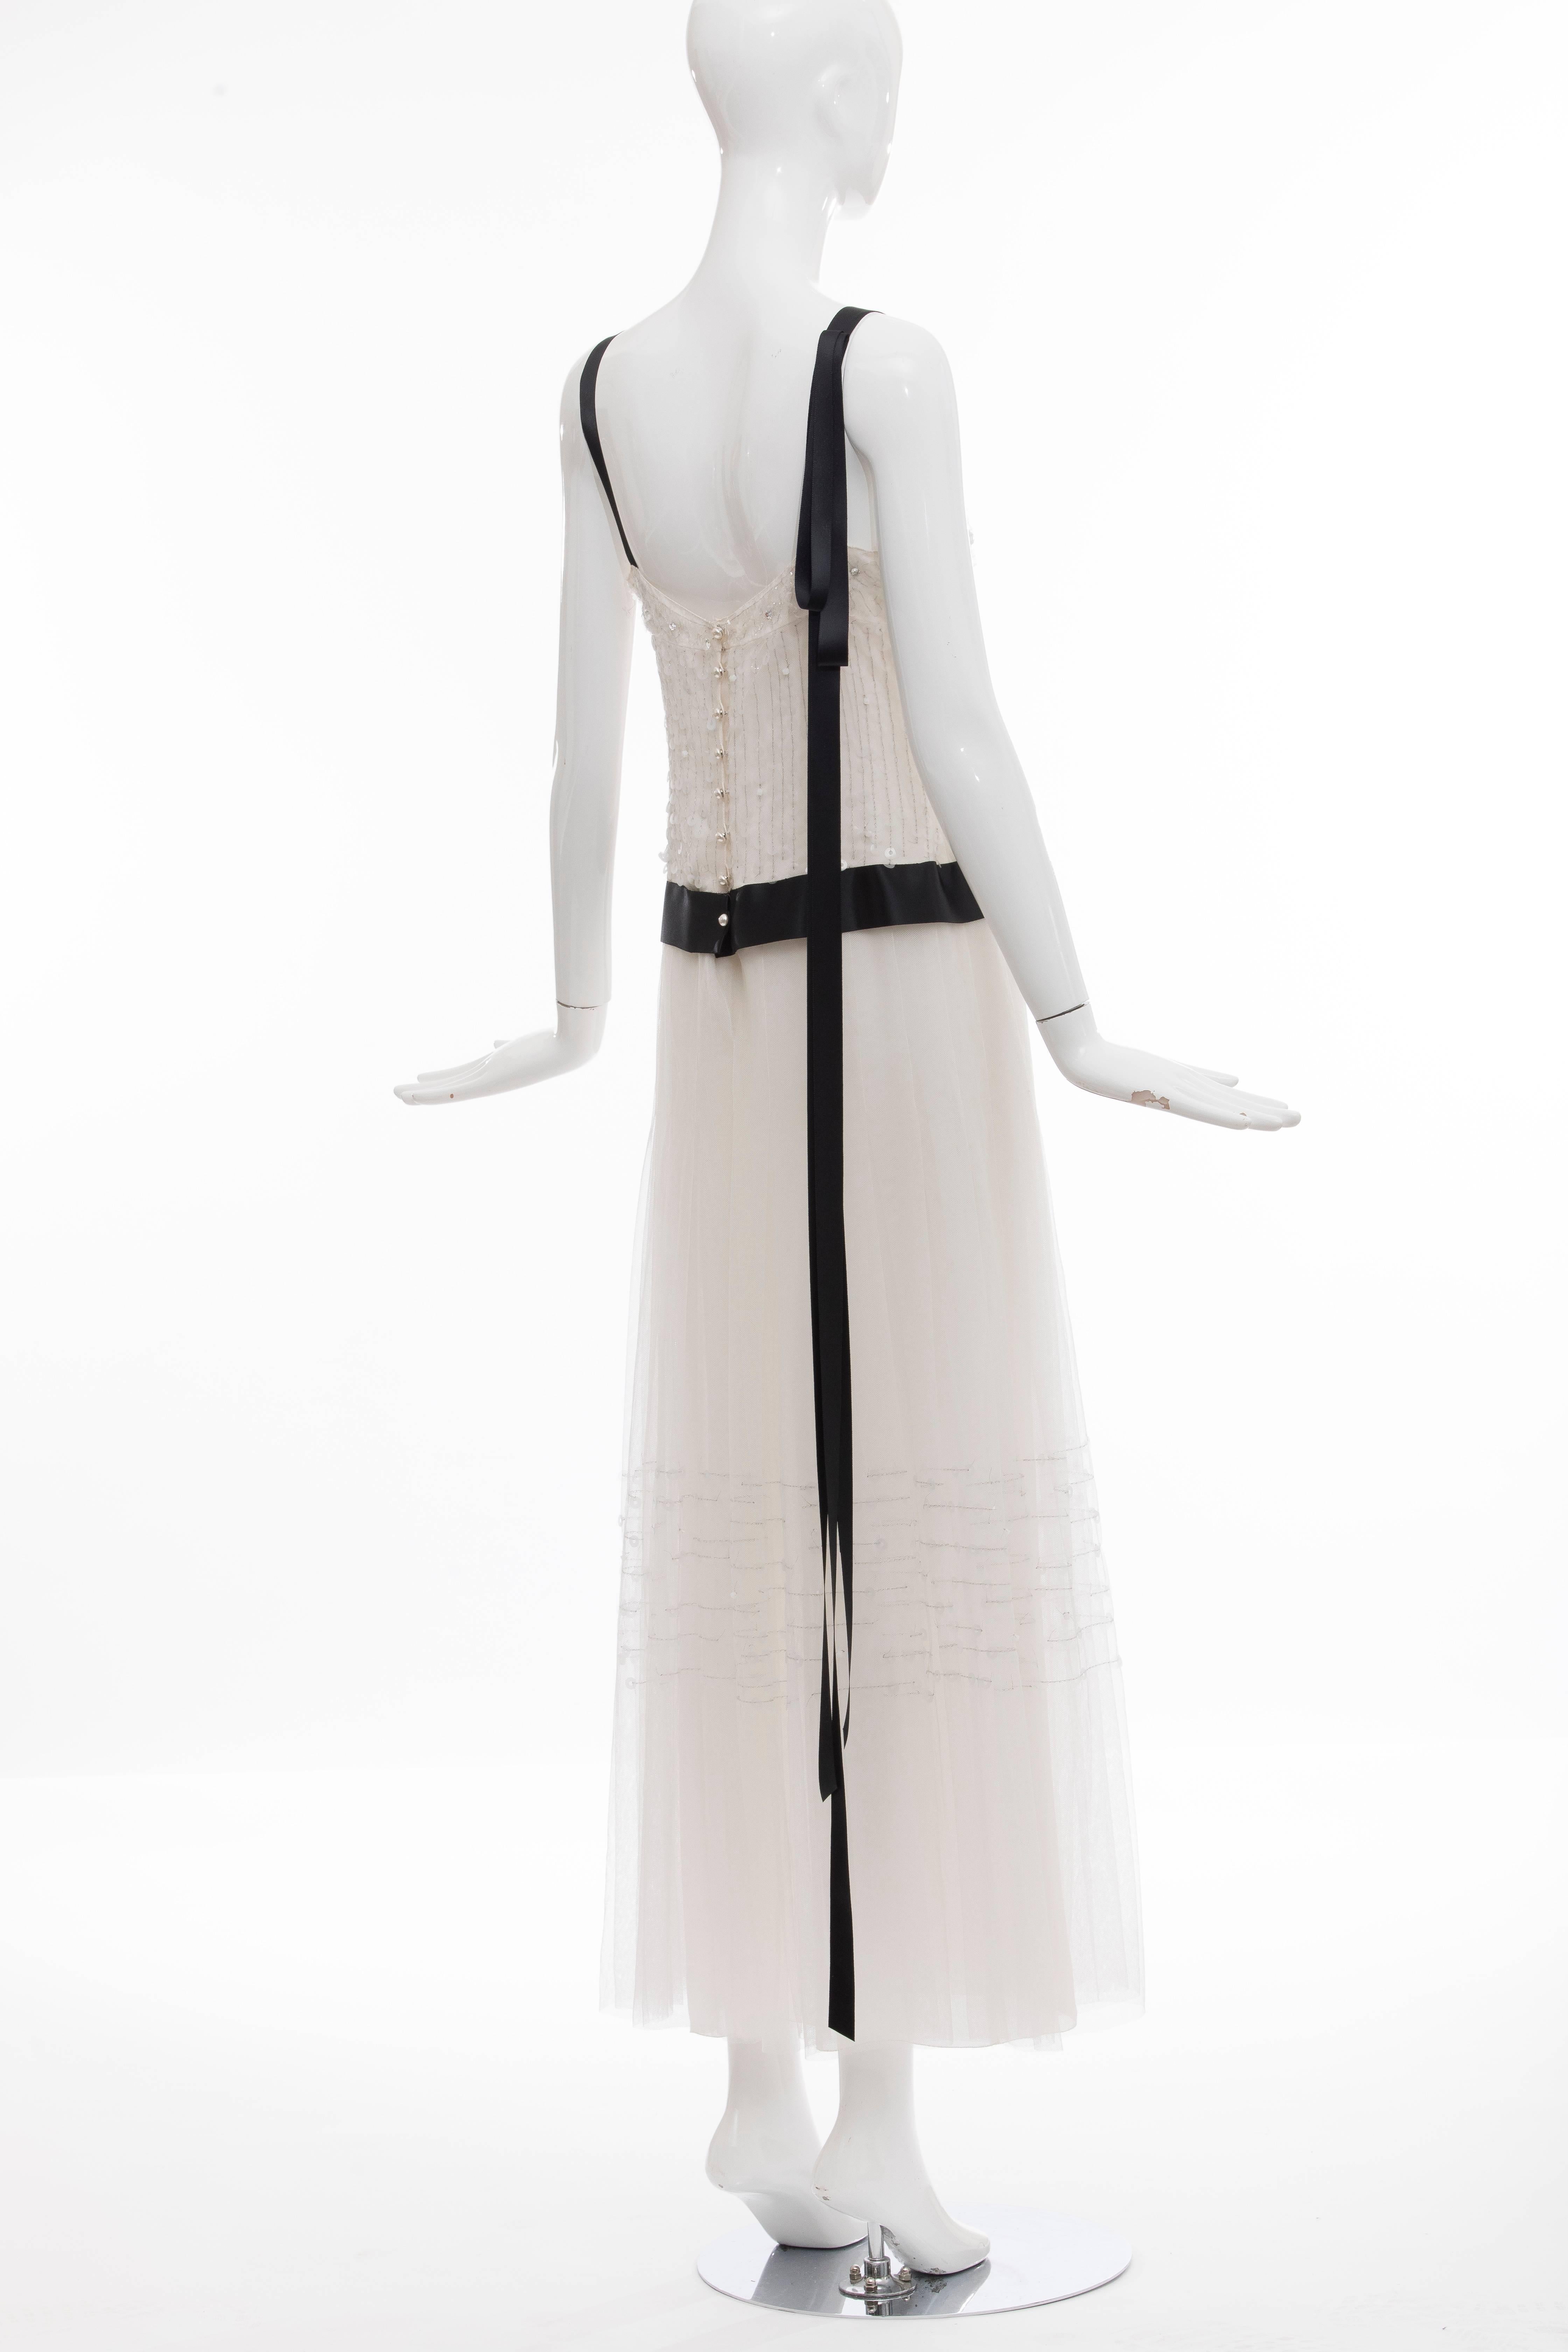 Chanel White Nylon Mesh Sequins Pearls Black Satin Evening Dress, Cruise 2005 3